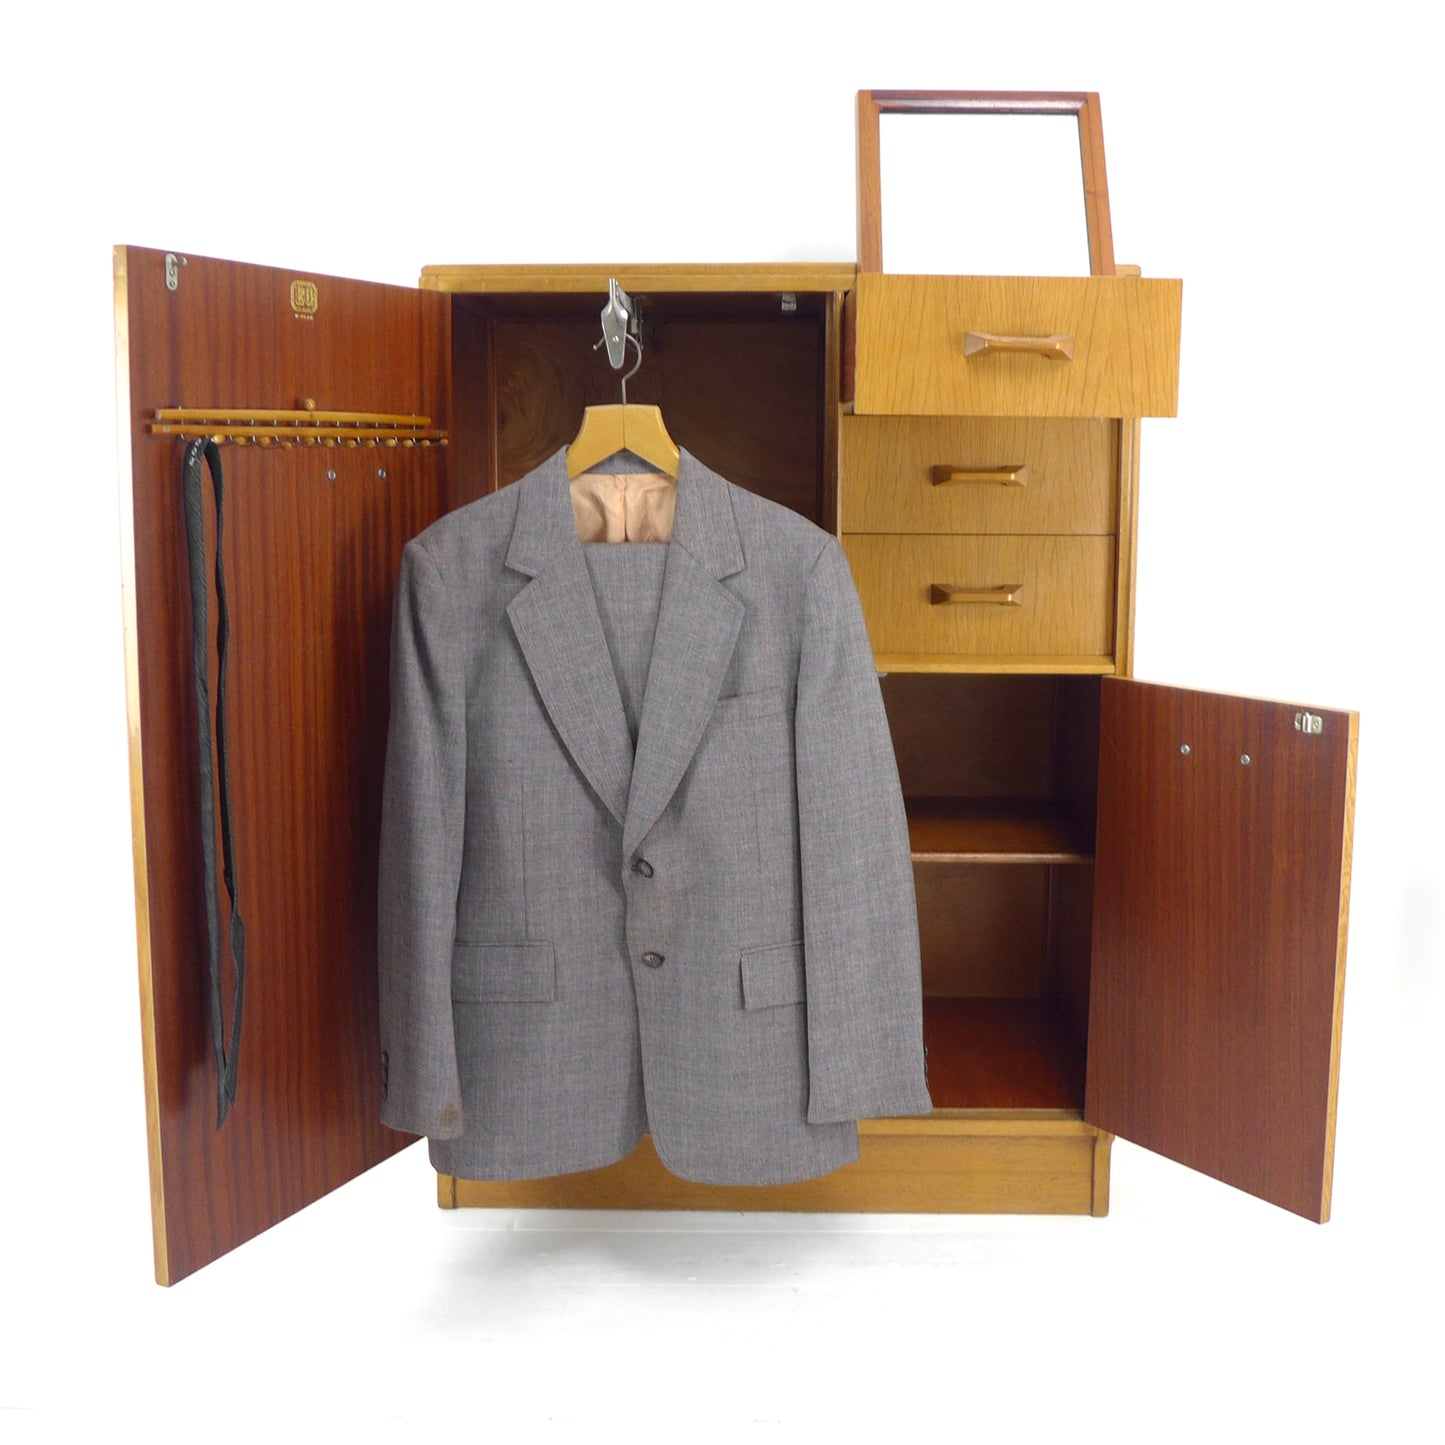 Vintage G PLAN Wardrobe - Gentleman's Tallboy with Drawers - Mid Century